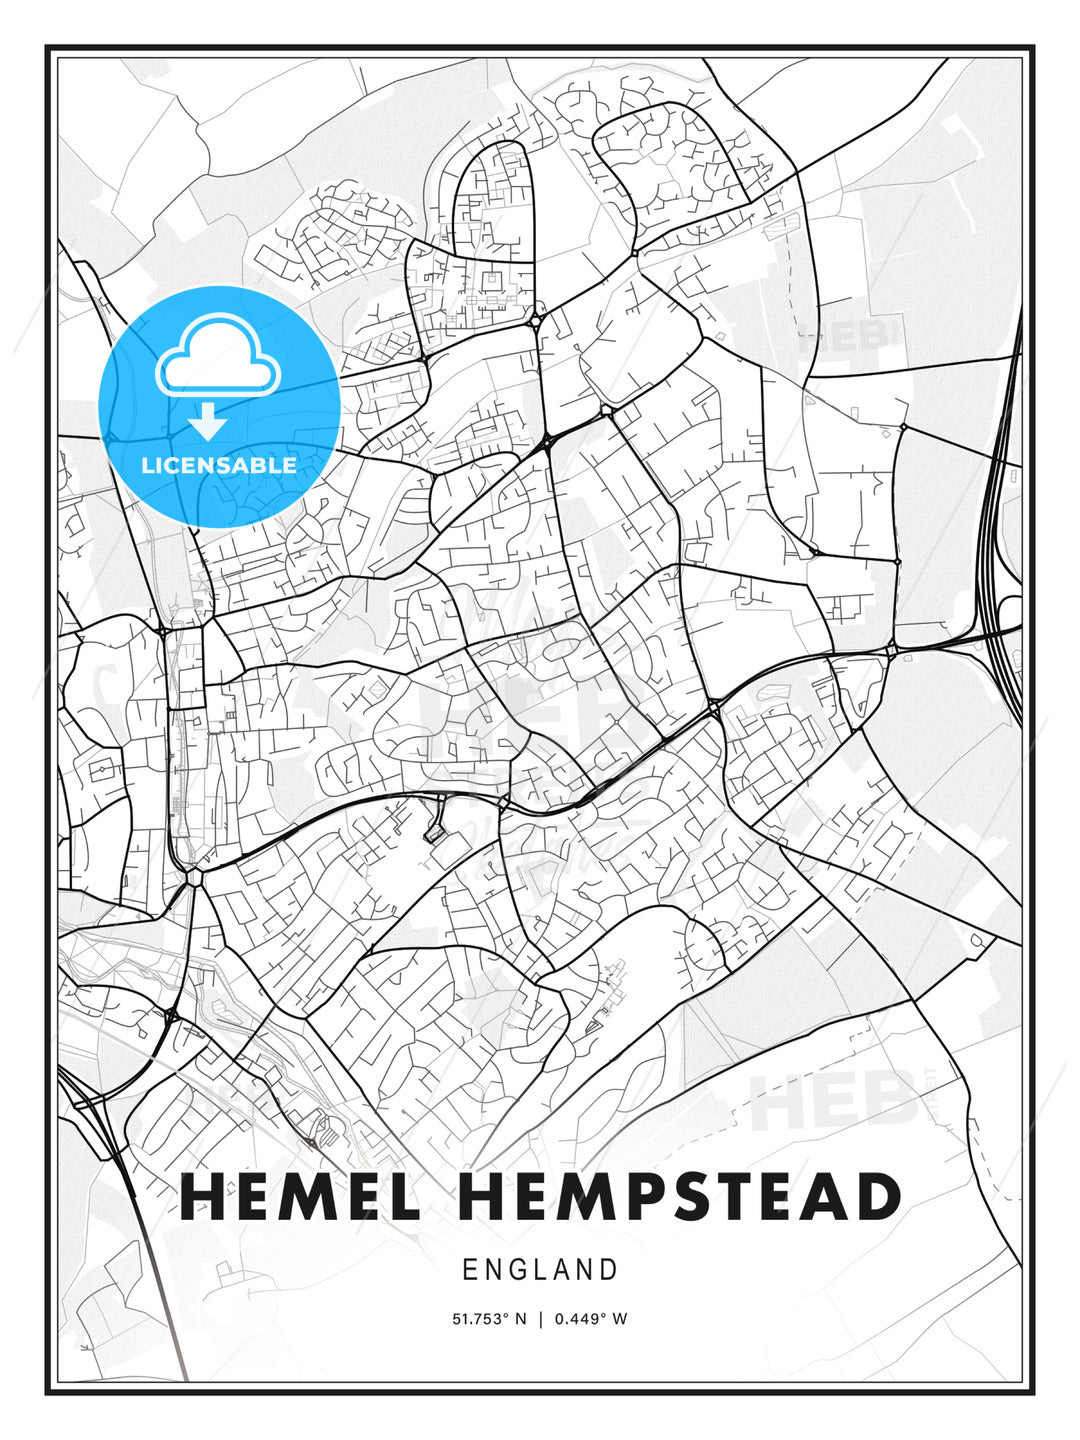 Hemel Hempstead, England, Modern Print Template in Various Formats - HEBSTREITS Sketches